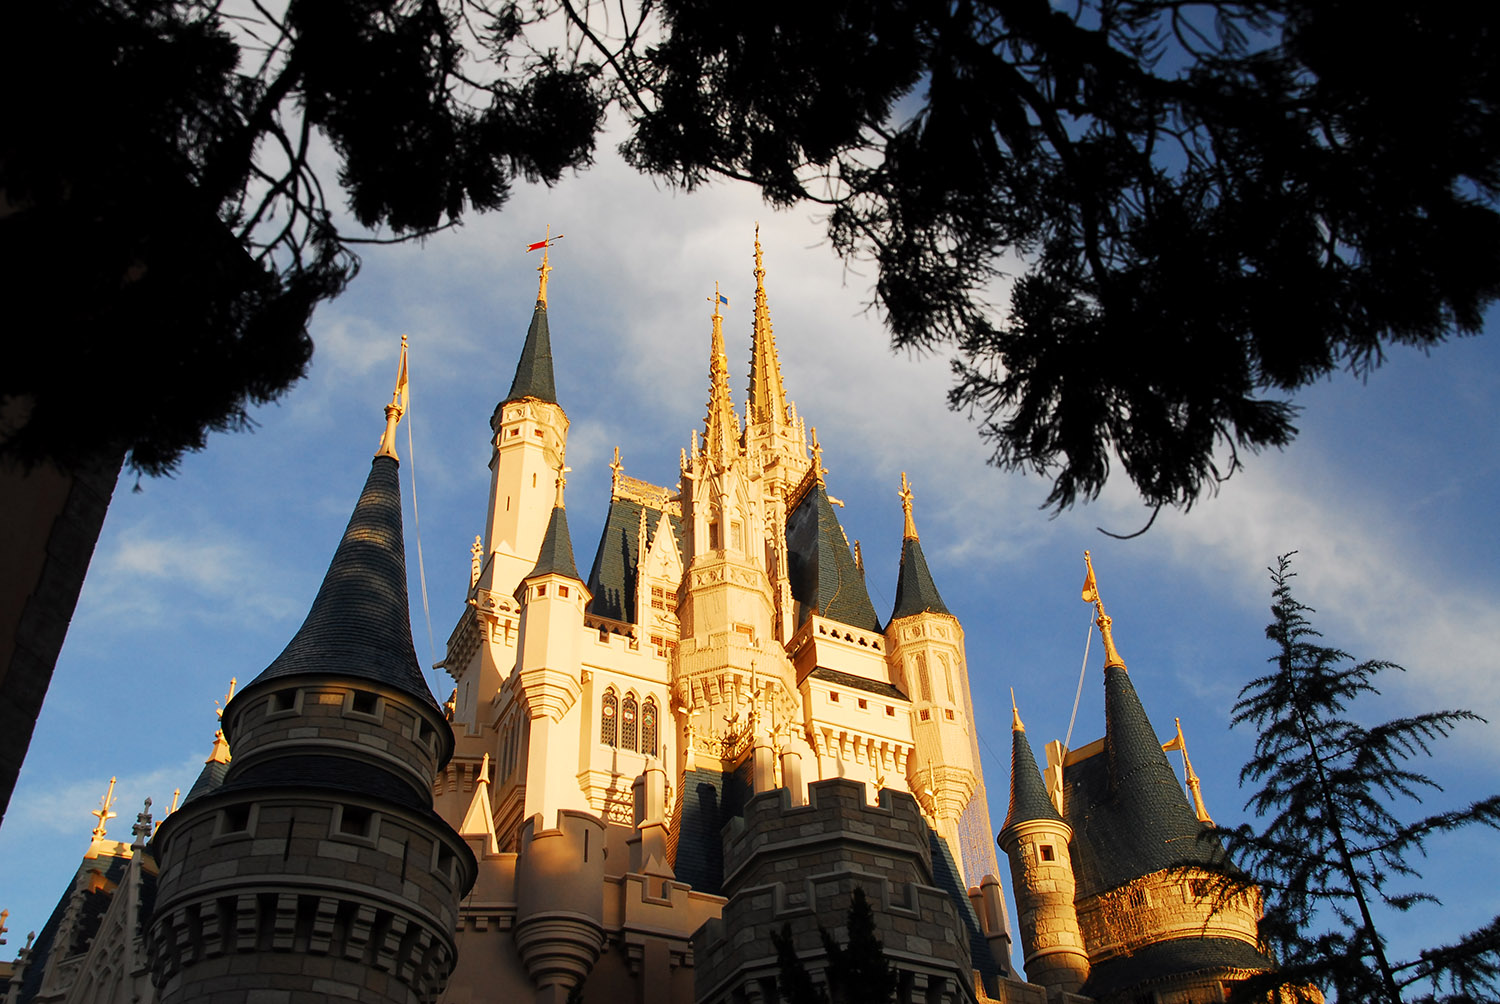 Architecture_Cinderella_Castle_Vacation_Tourism_Disney_World_Orlando_Florida.JPG